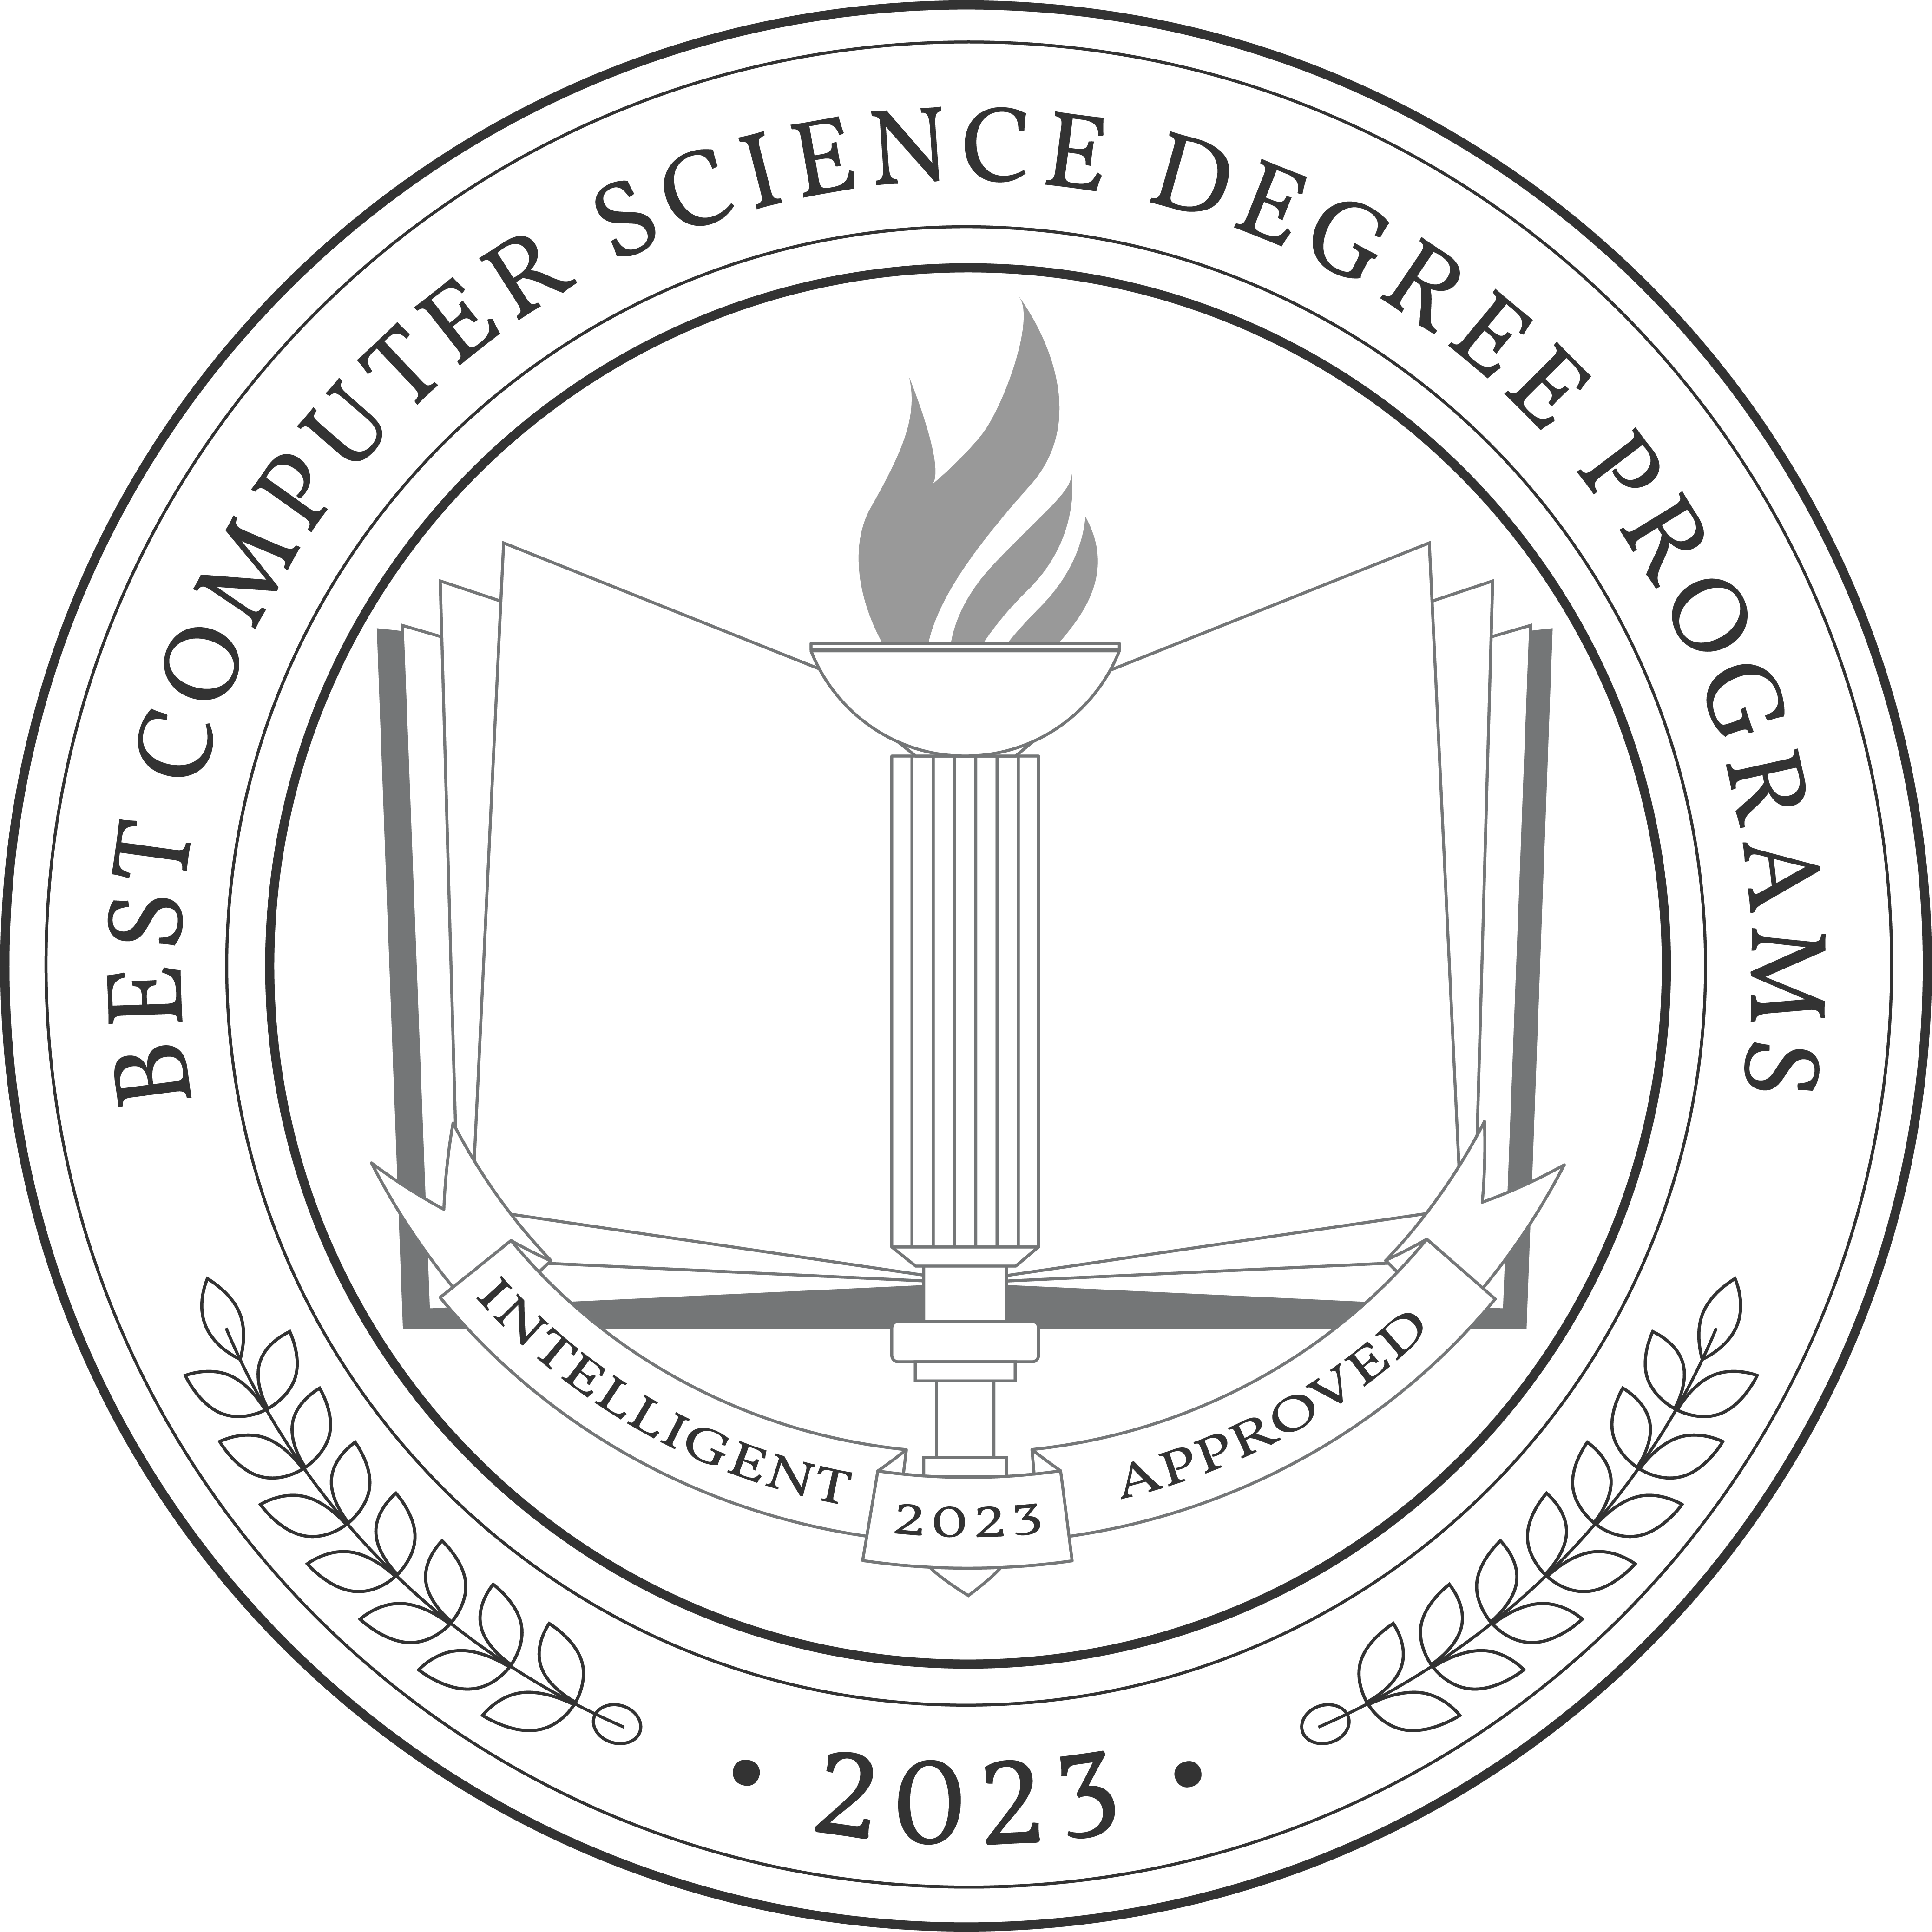 Best Computer Science Degree Programs 2023